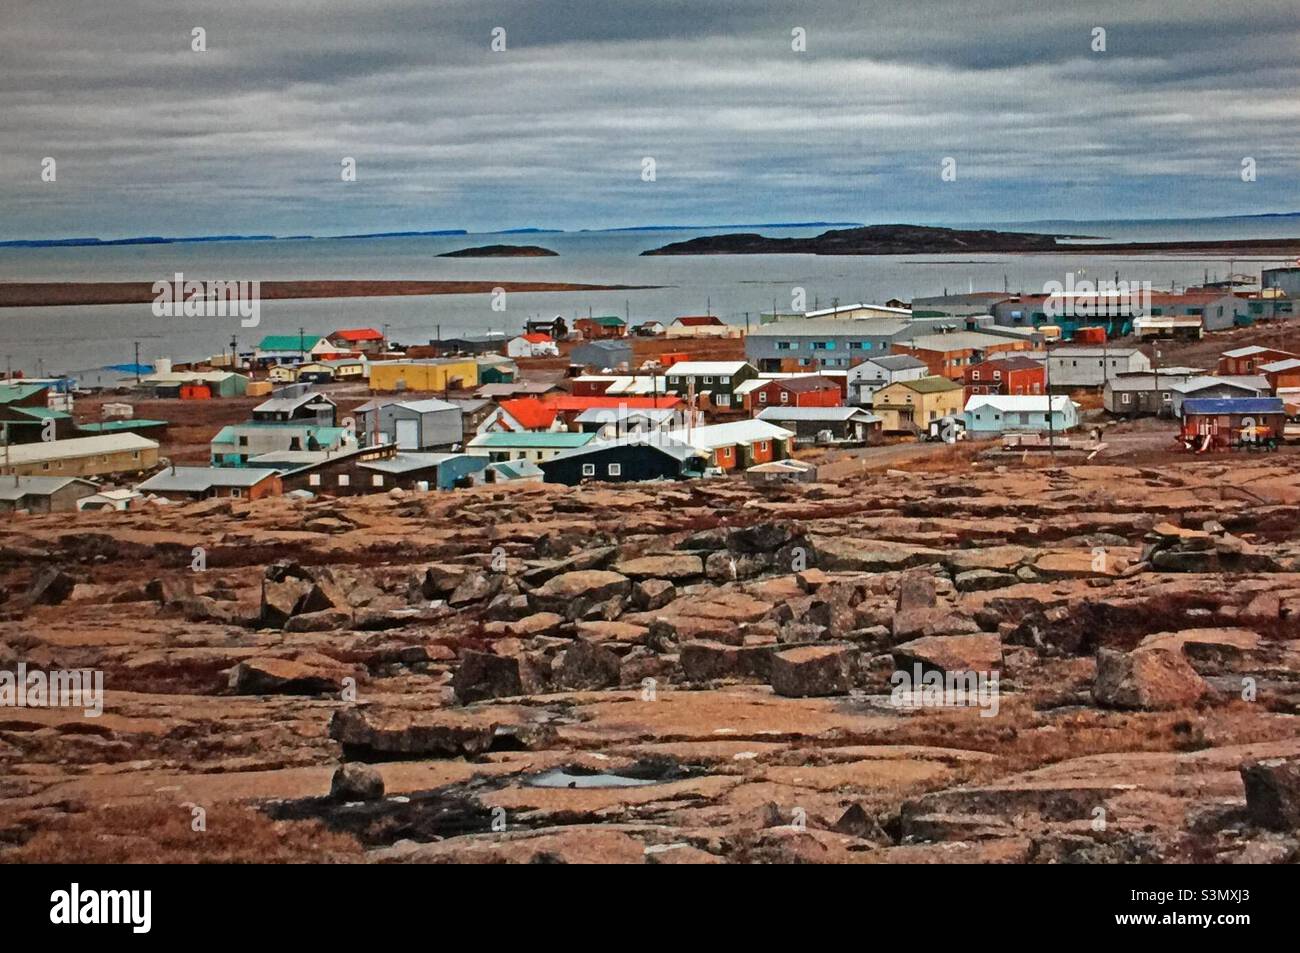 Pueblo de Kugluktuk, Nunavut, Canadá, Mar de Beaufort, Ártico canadiense Foto de stock